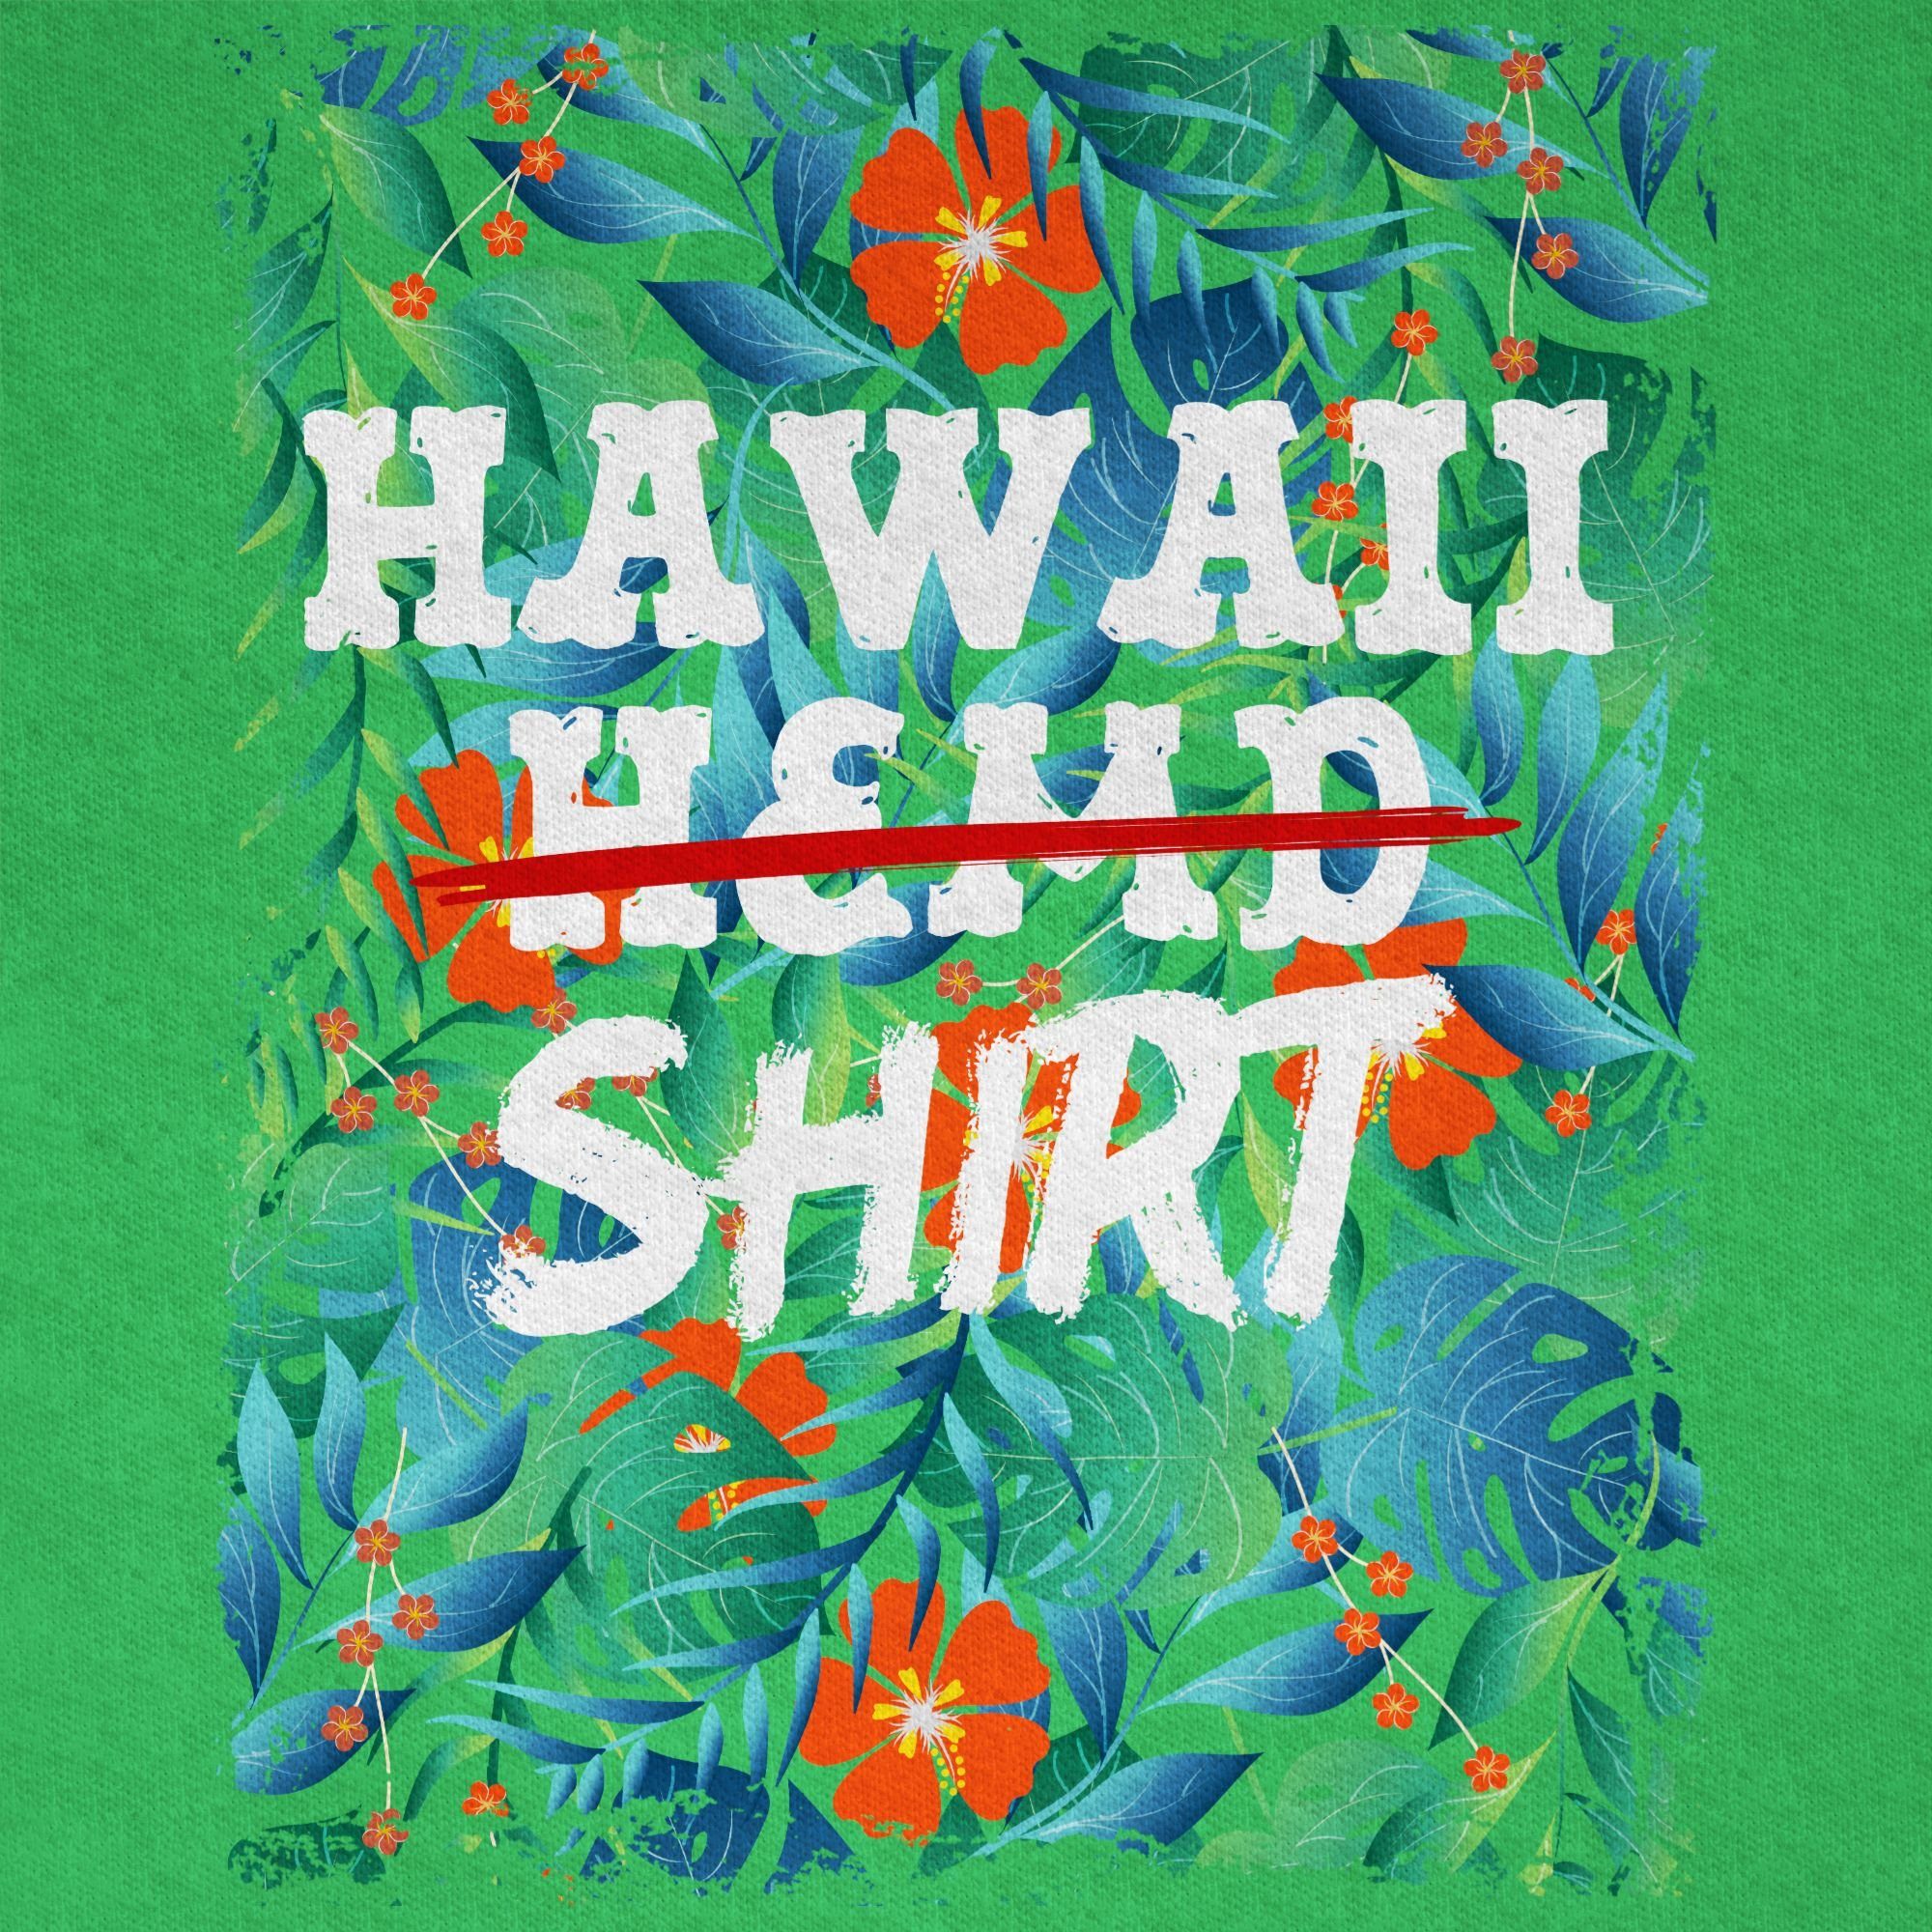 Shirtracer T-Shirt Karneval Hawaiian Grün Aloha & Hawaii Shirt - Party Karibik Fasching Hemd Hawaii-Kleidung 1